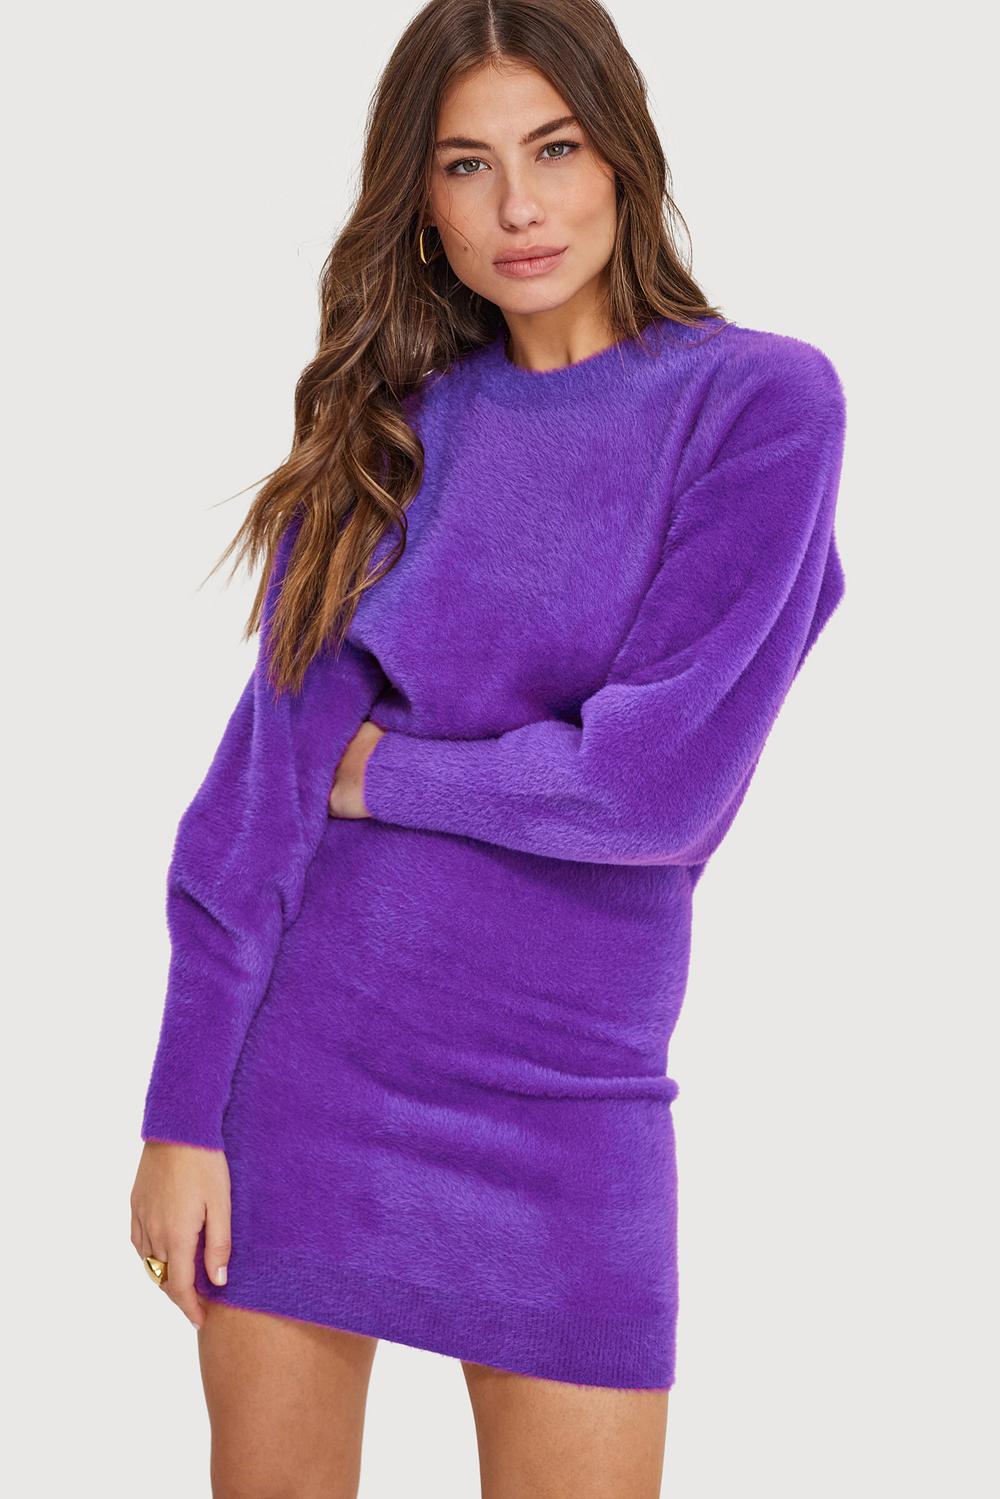 Purple fluffy dress